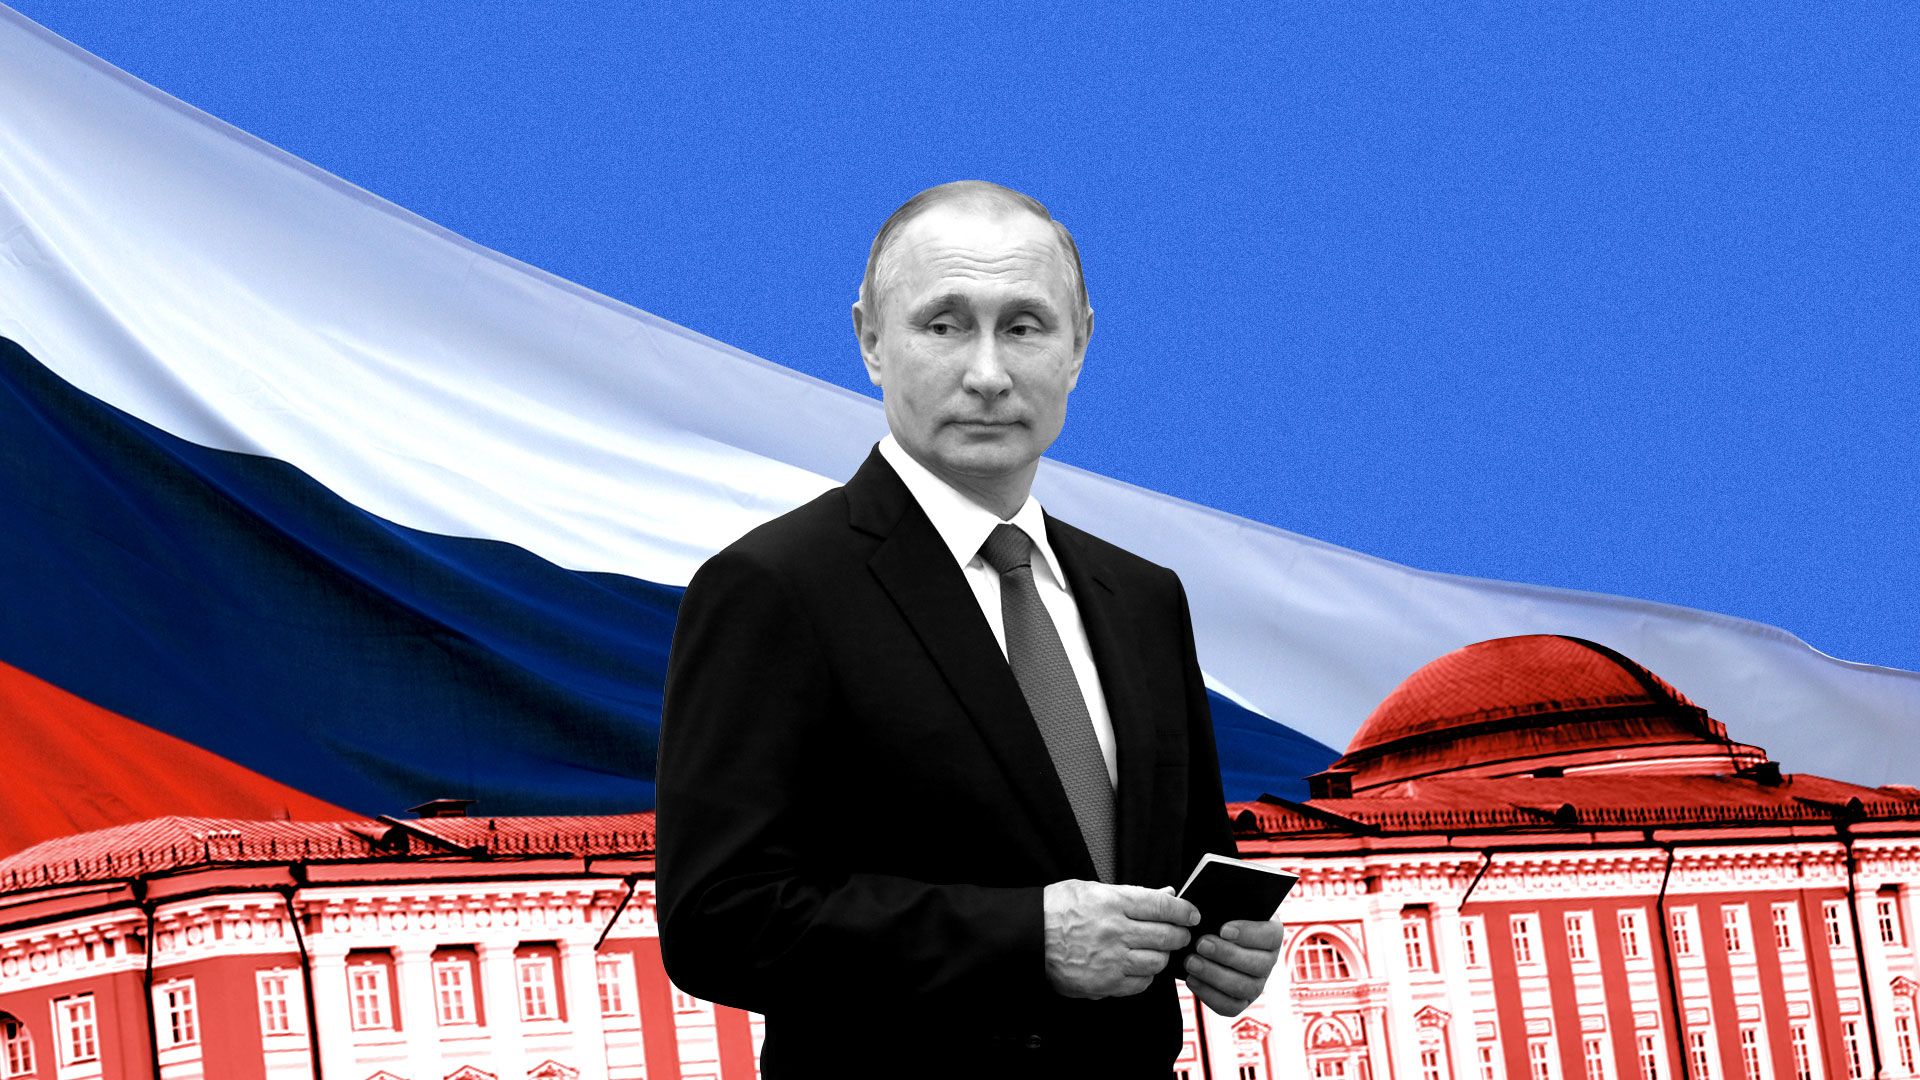 Photo illustration of Vladimir Putin with the Kremlin Senate and Russian flag behind him.